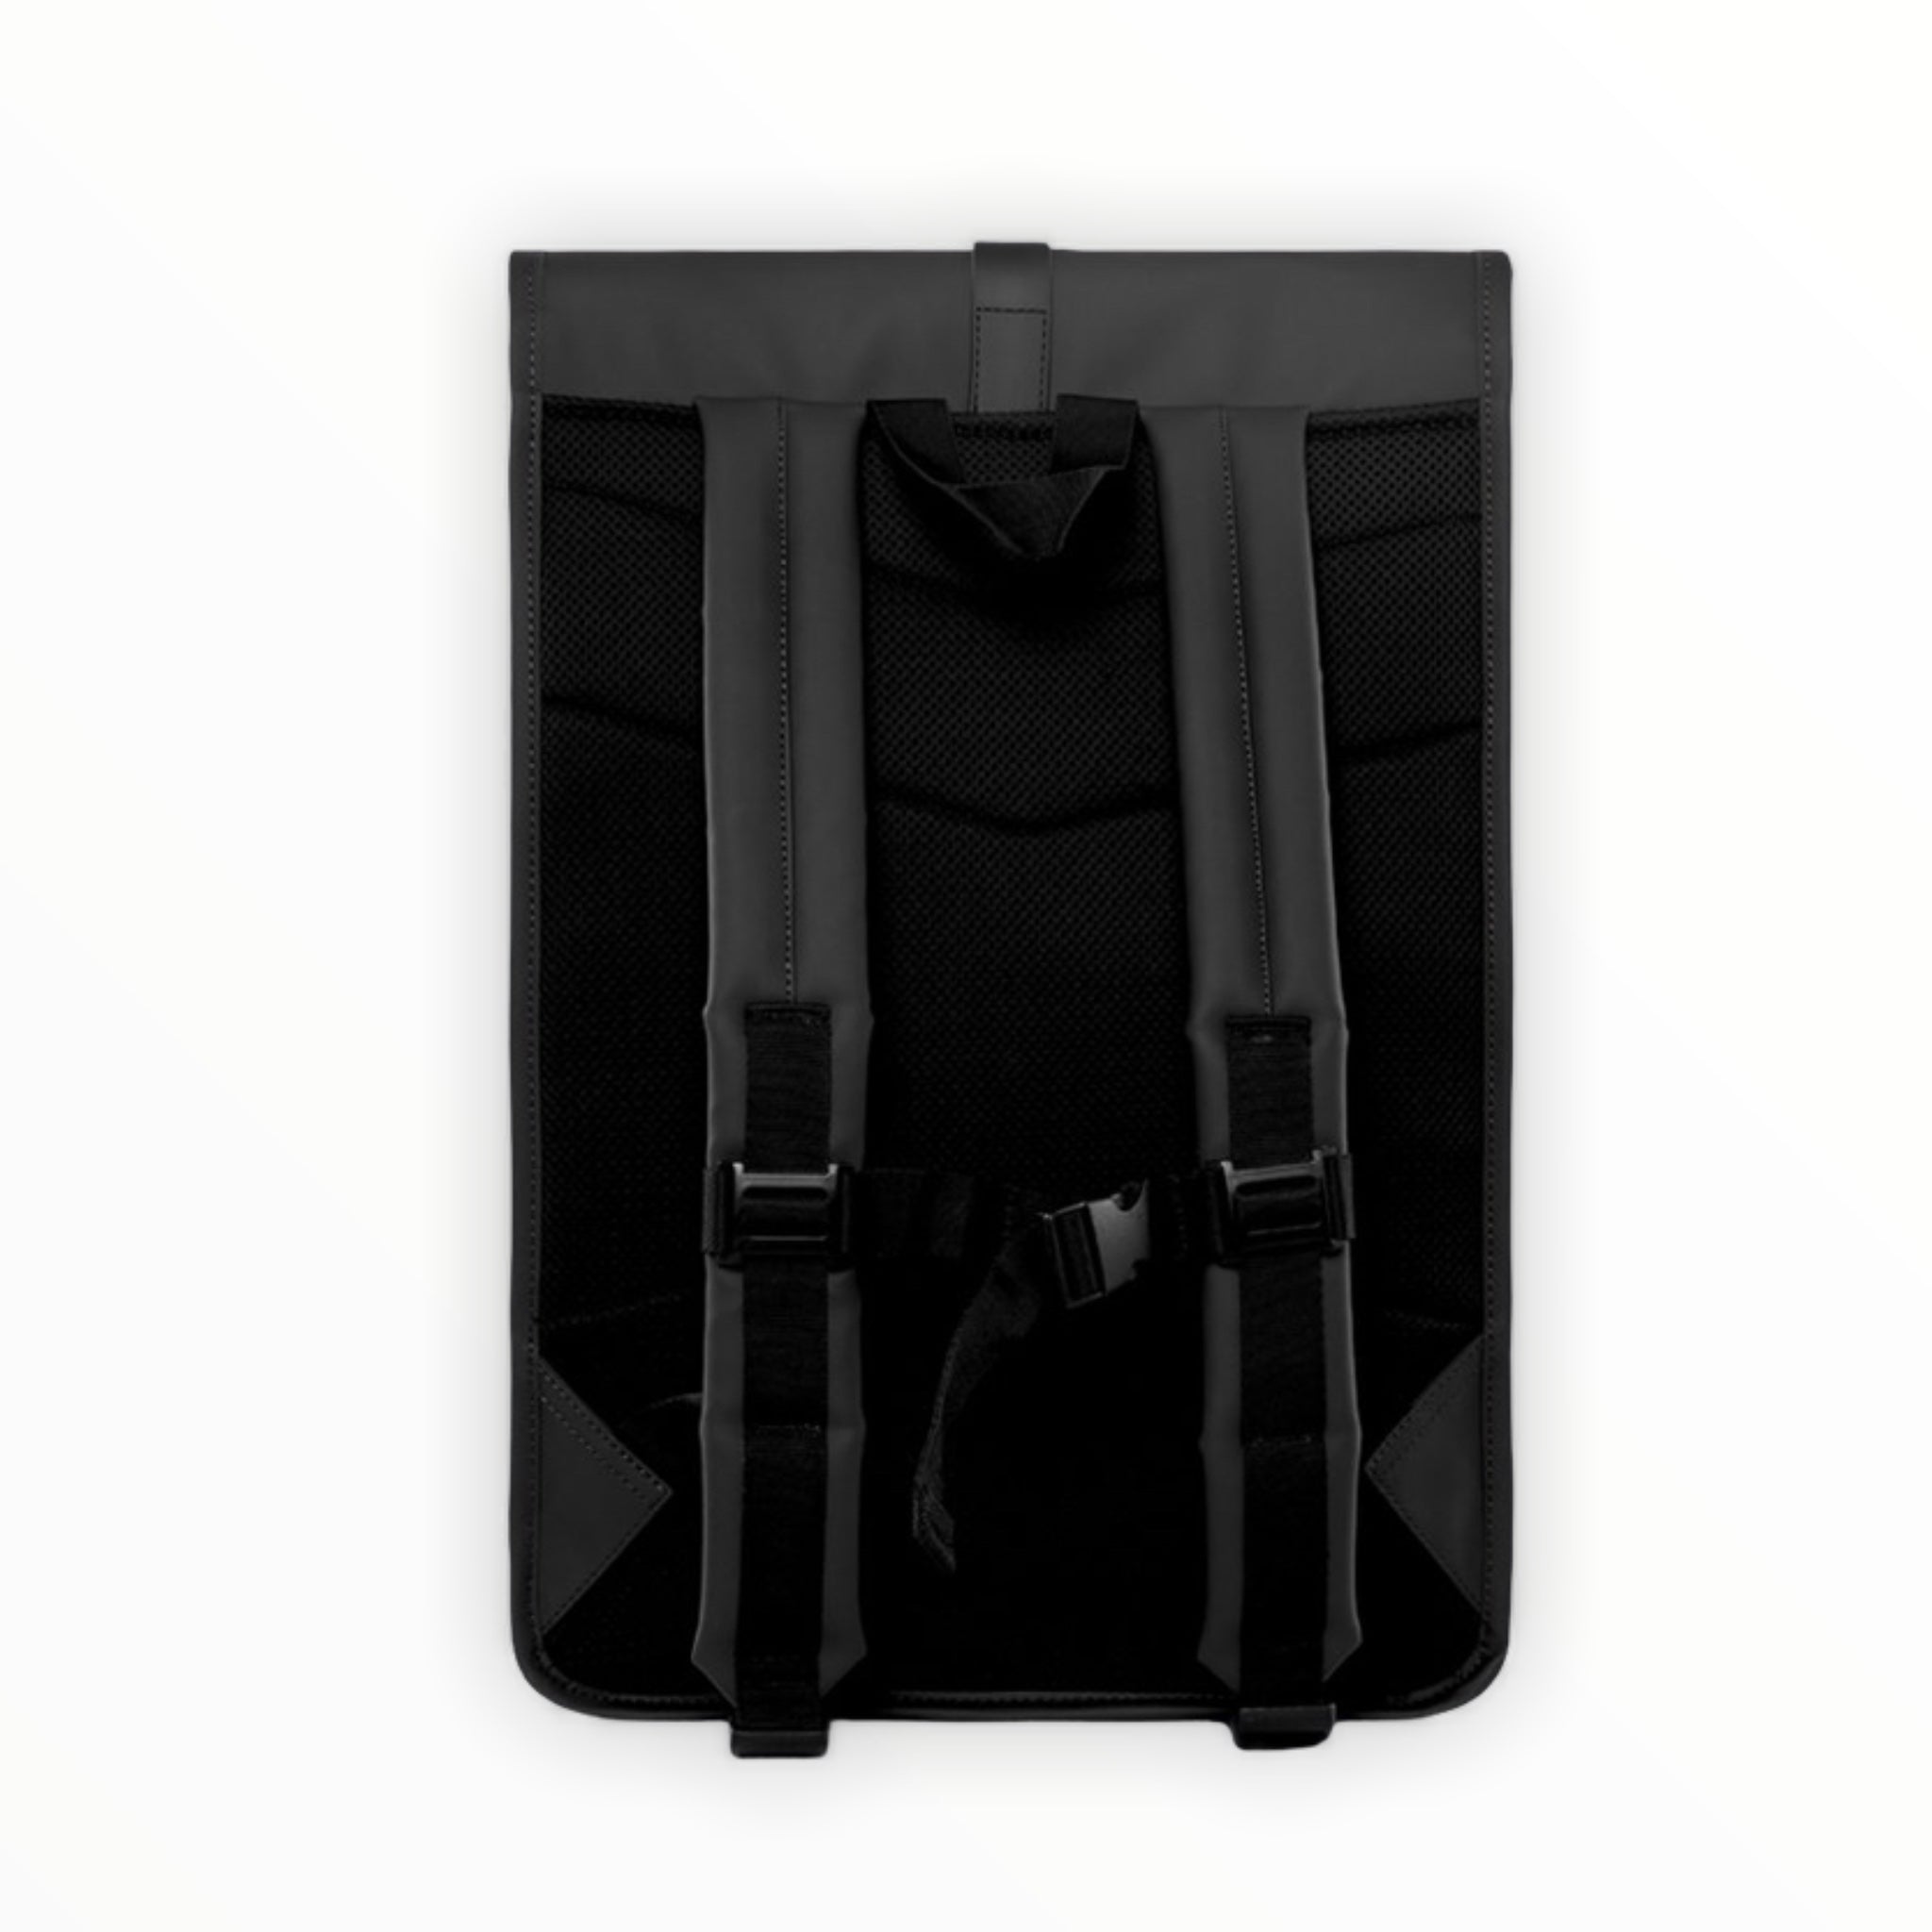 Backpack Black - Rains